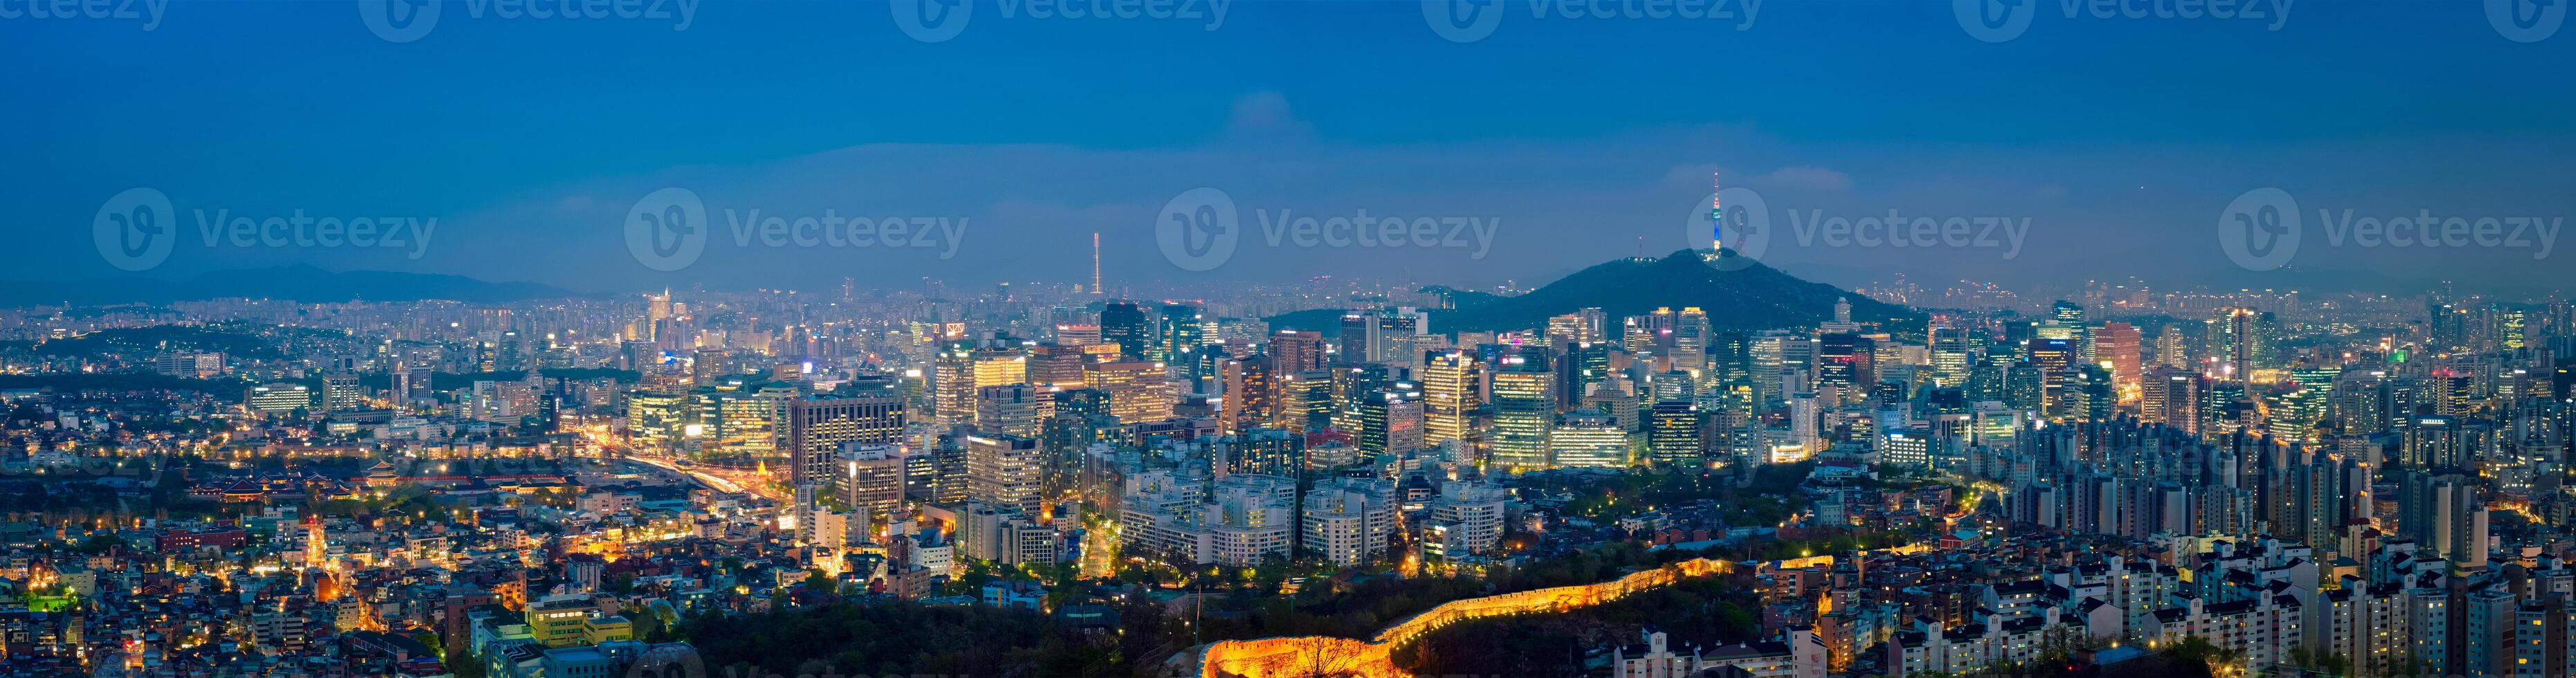 Seoul skyline in the night, South Korea. photo